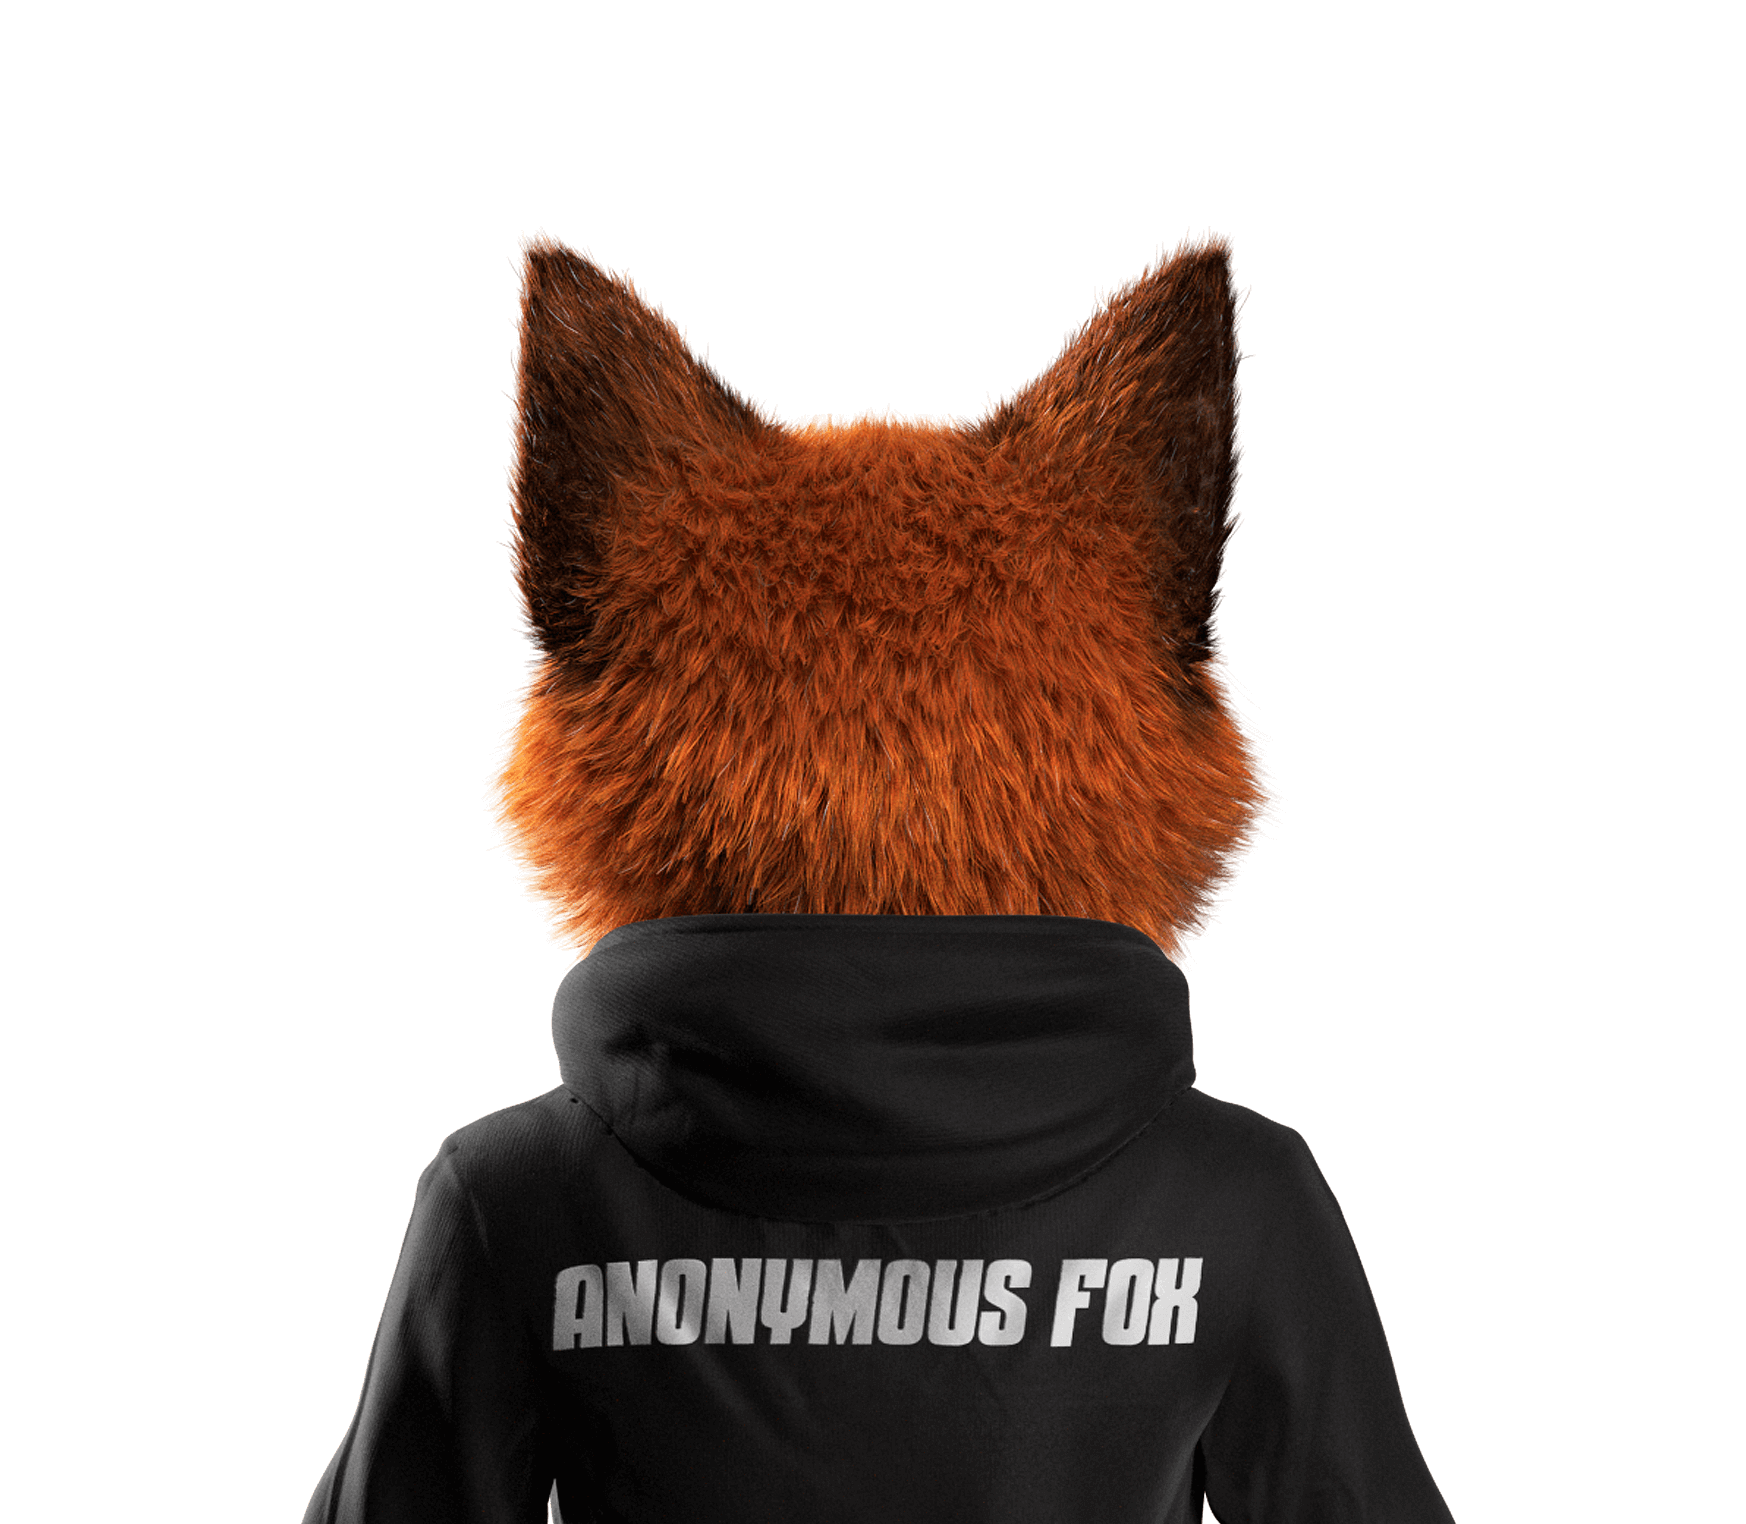 AnonymousFox چیست؟